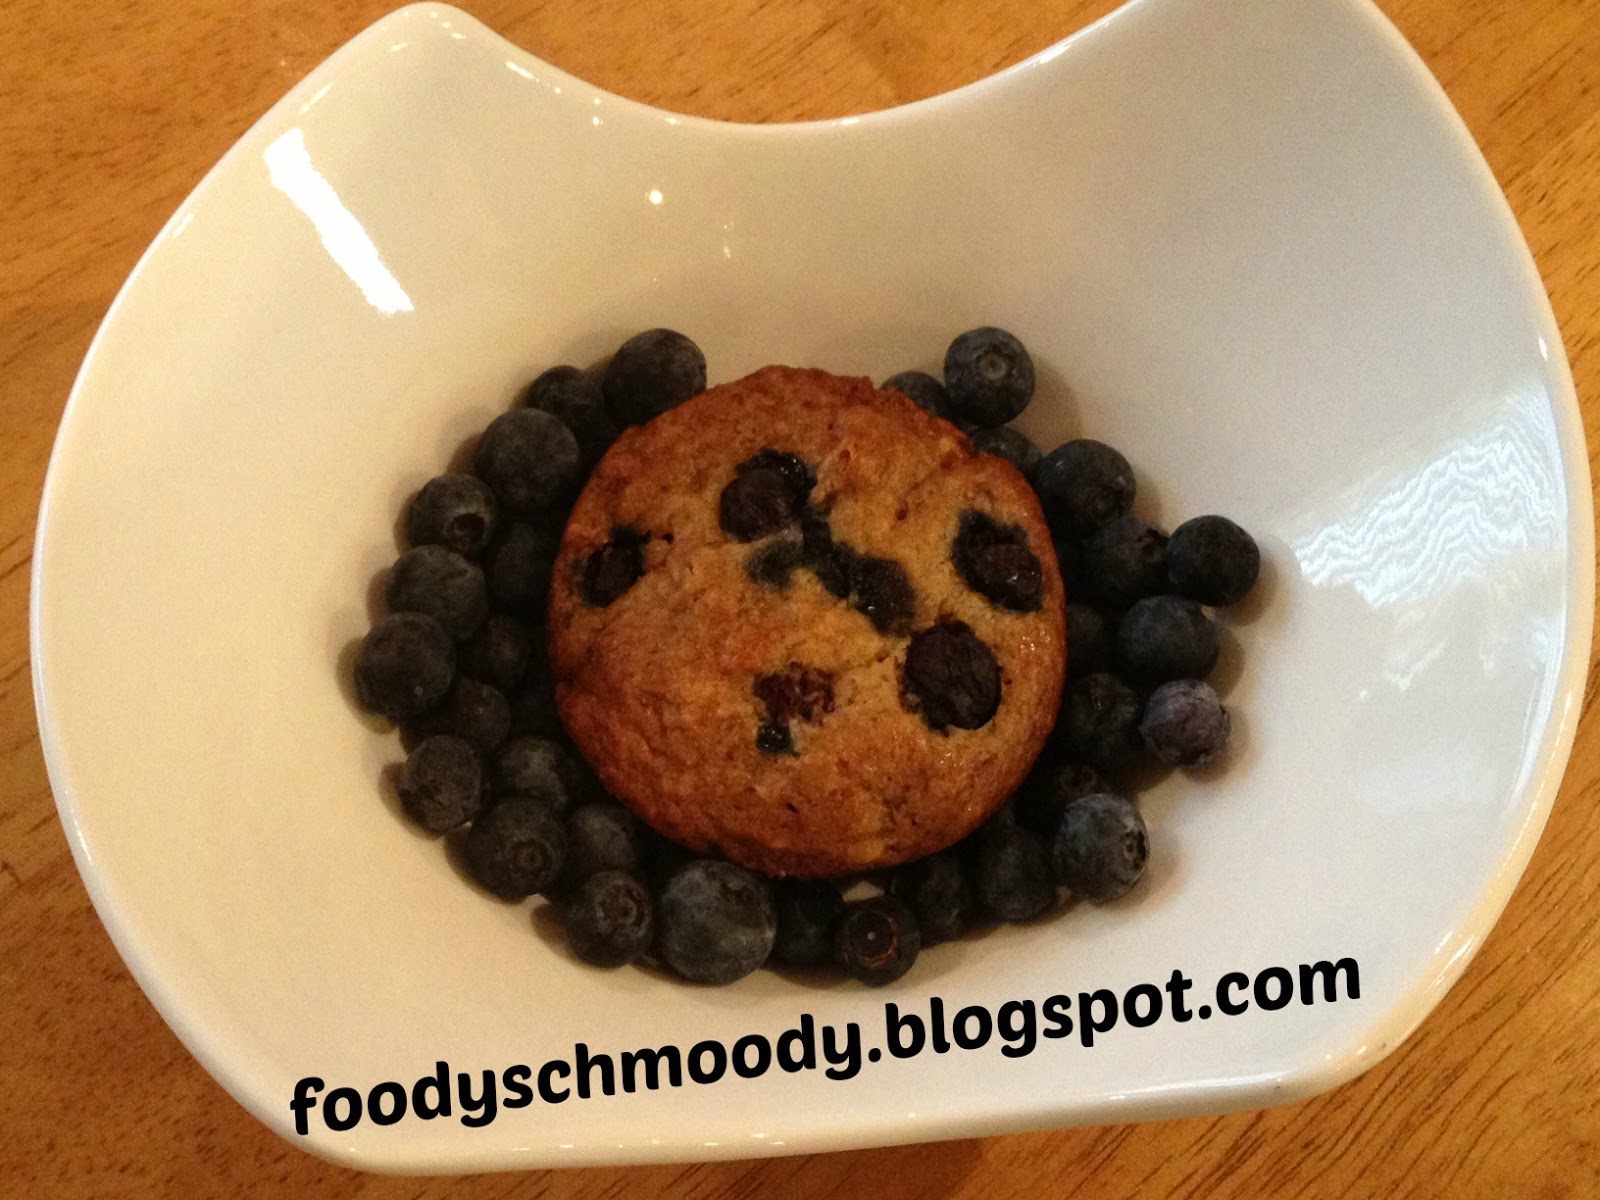 Coconut Oil Blue Banana Muffins - Foody Schmoody Blog